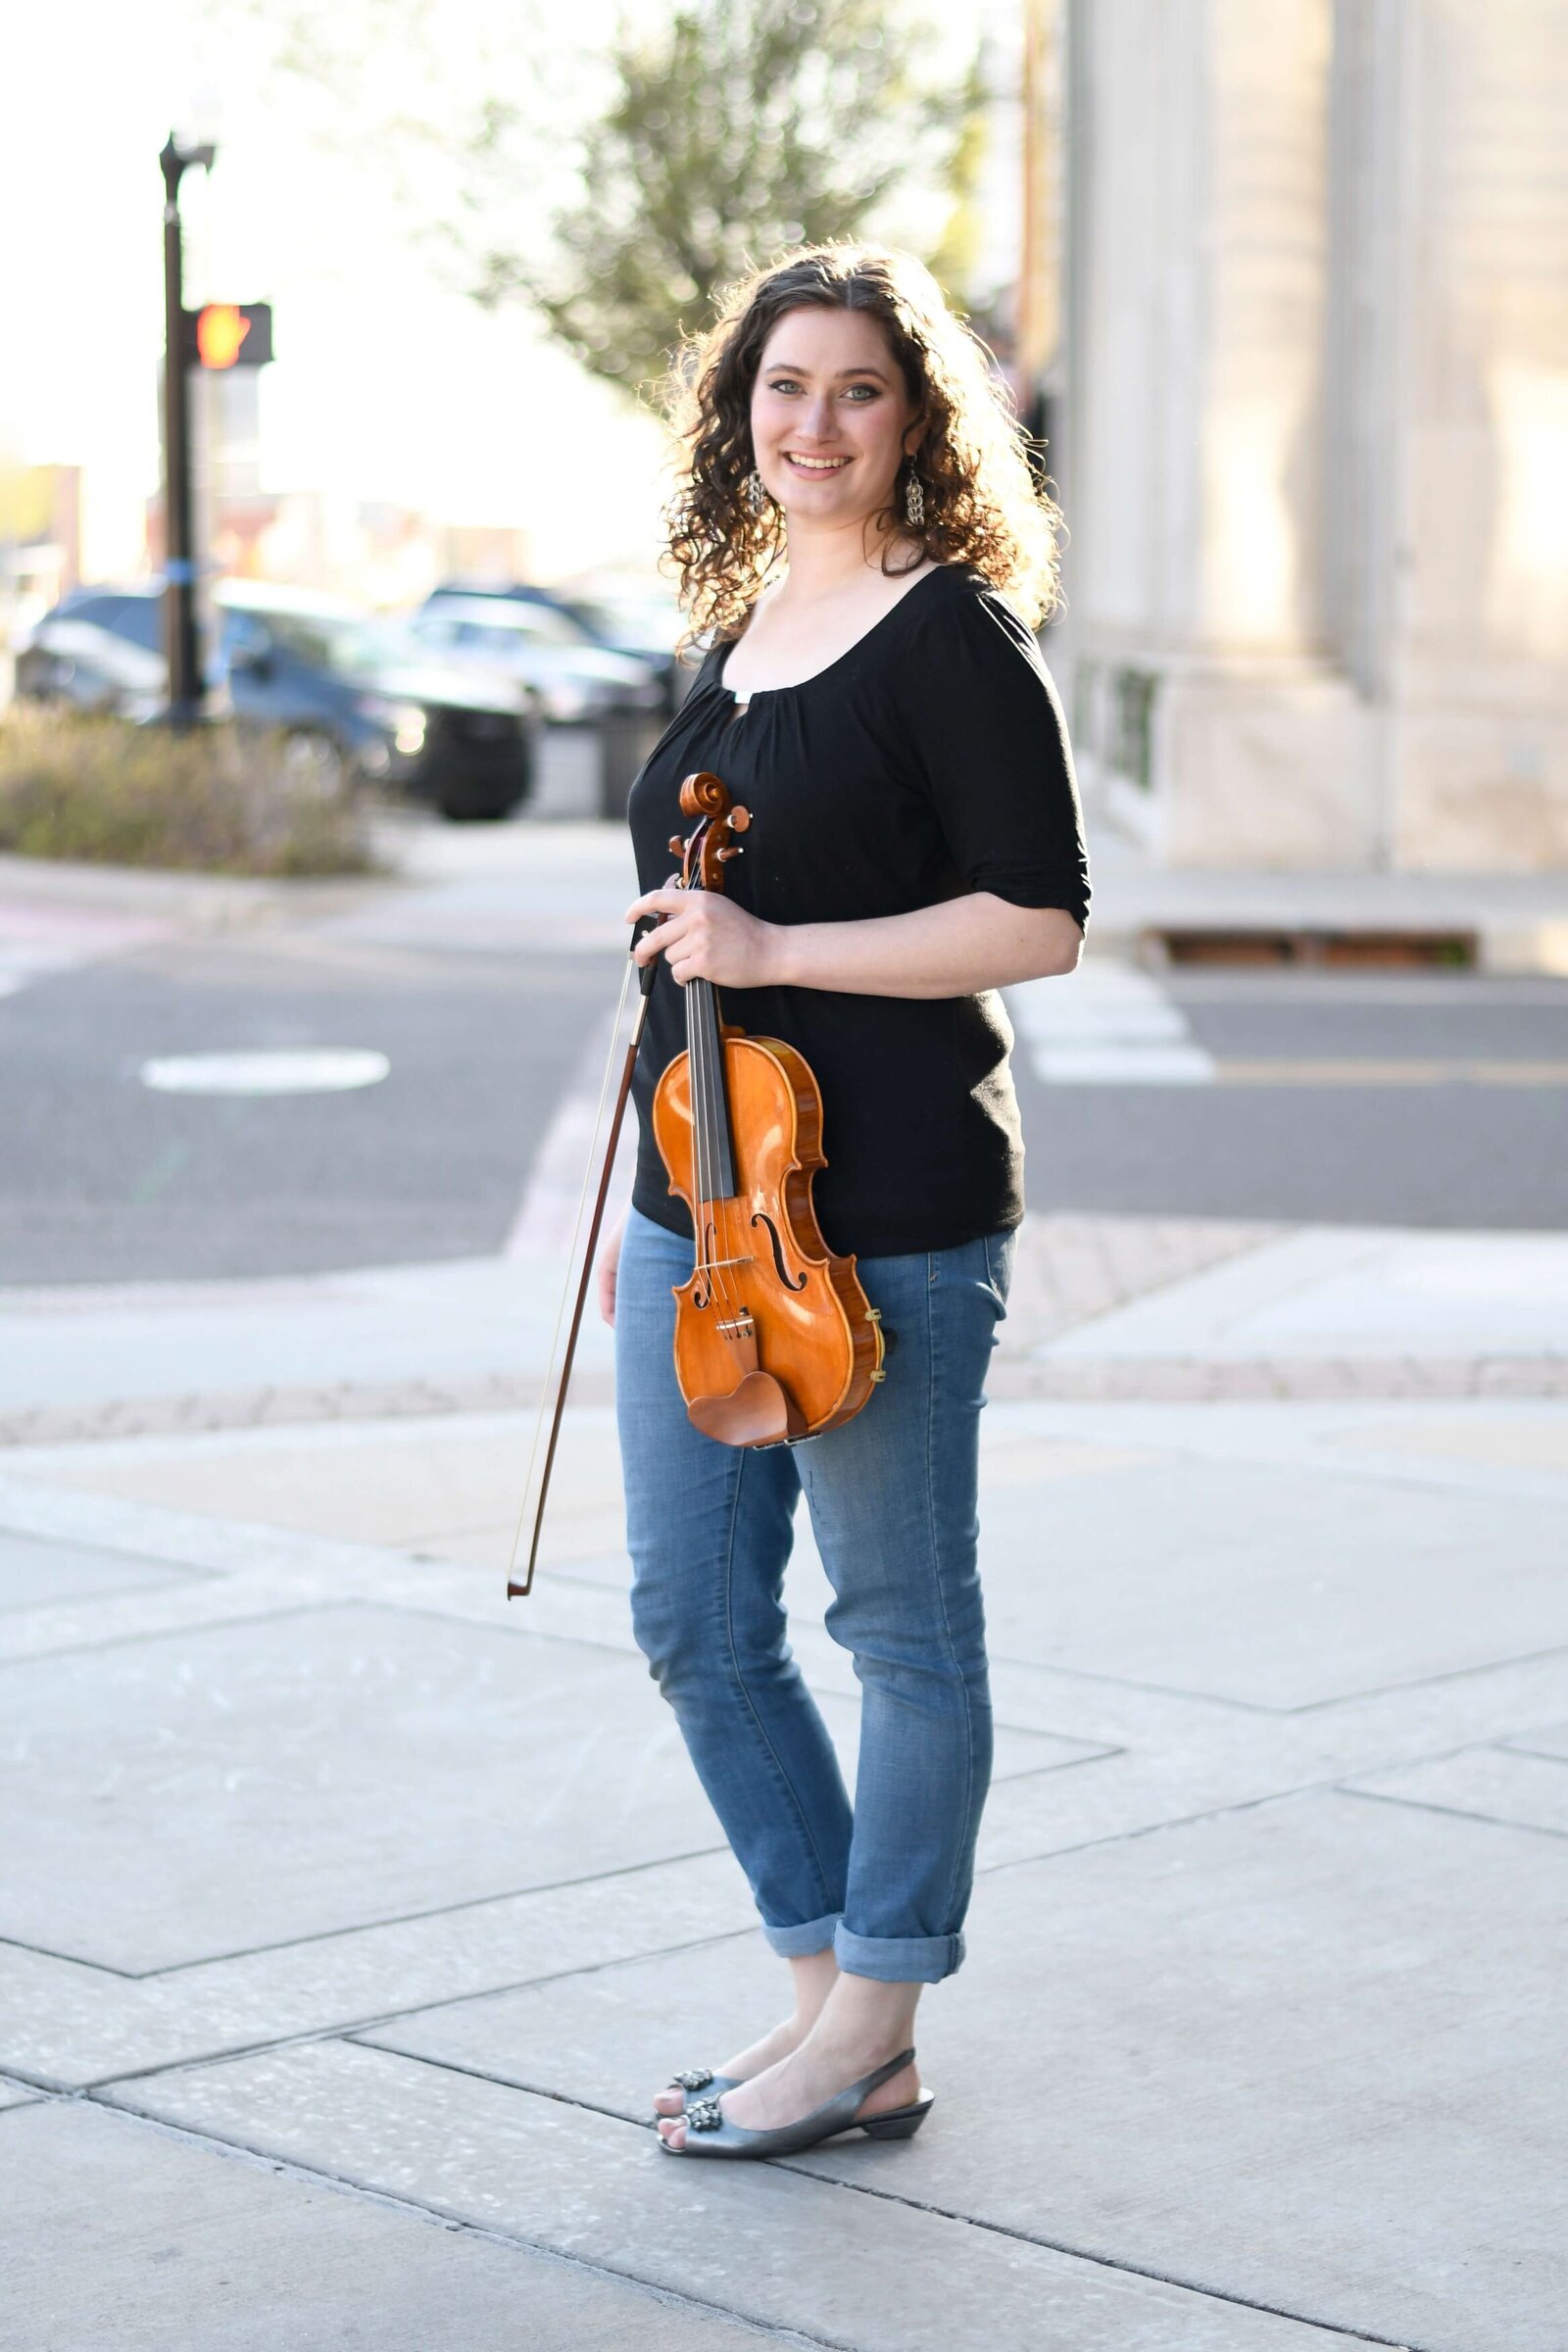 Violin teacher Erika Burns stands with her violin at a street corner.